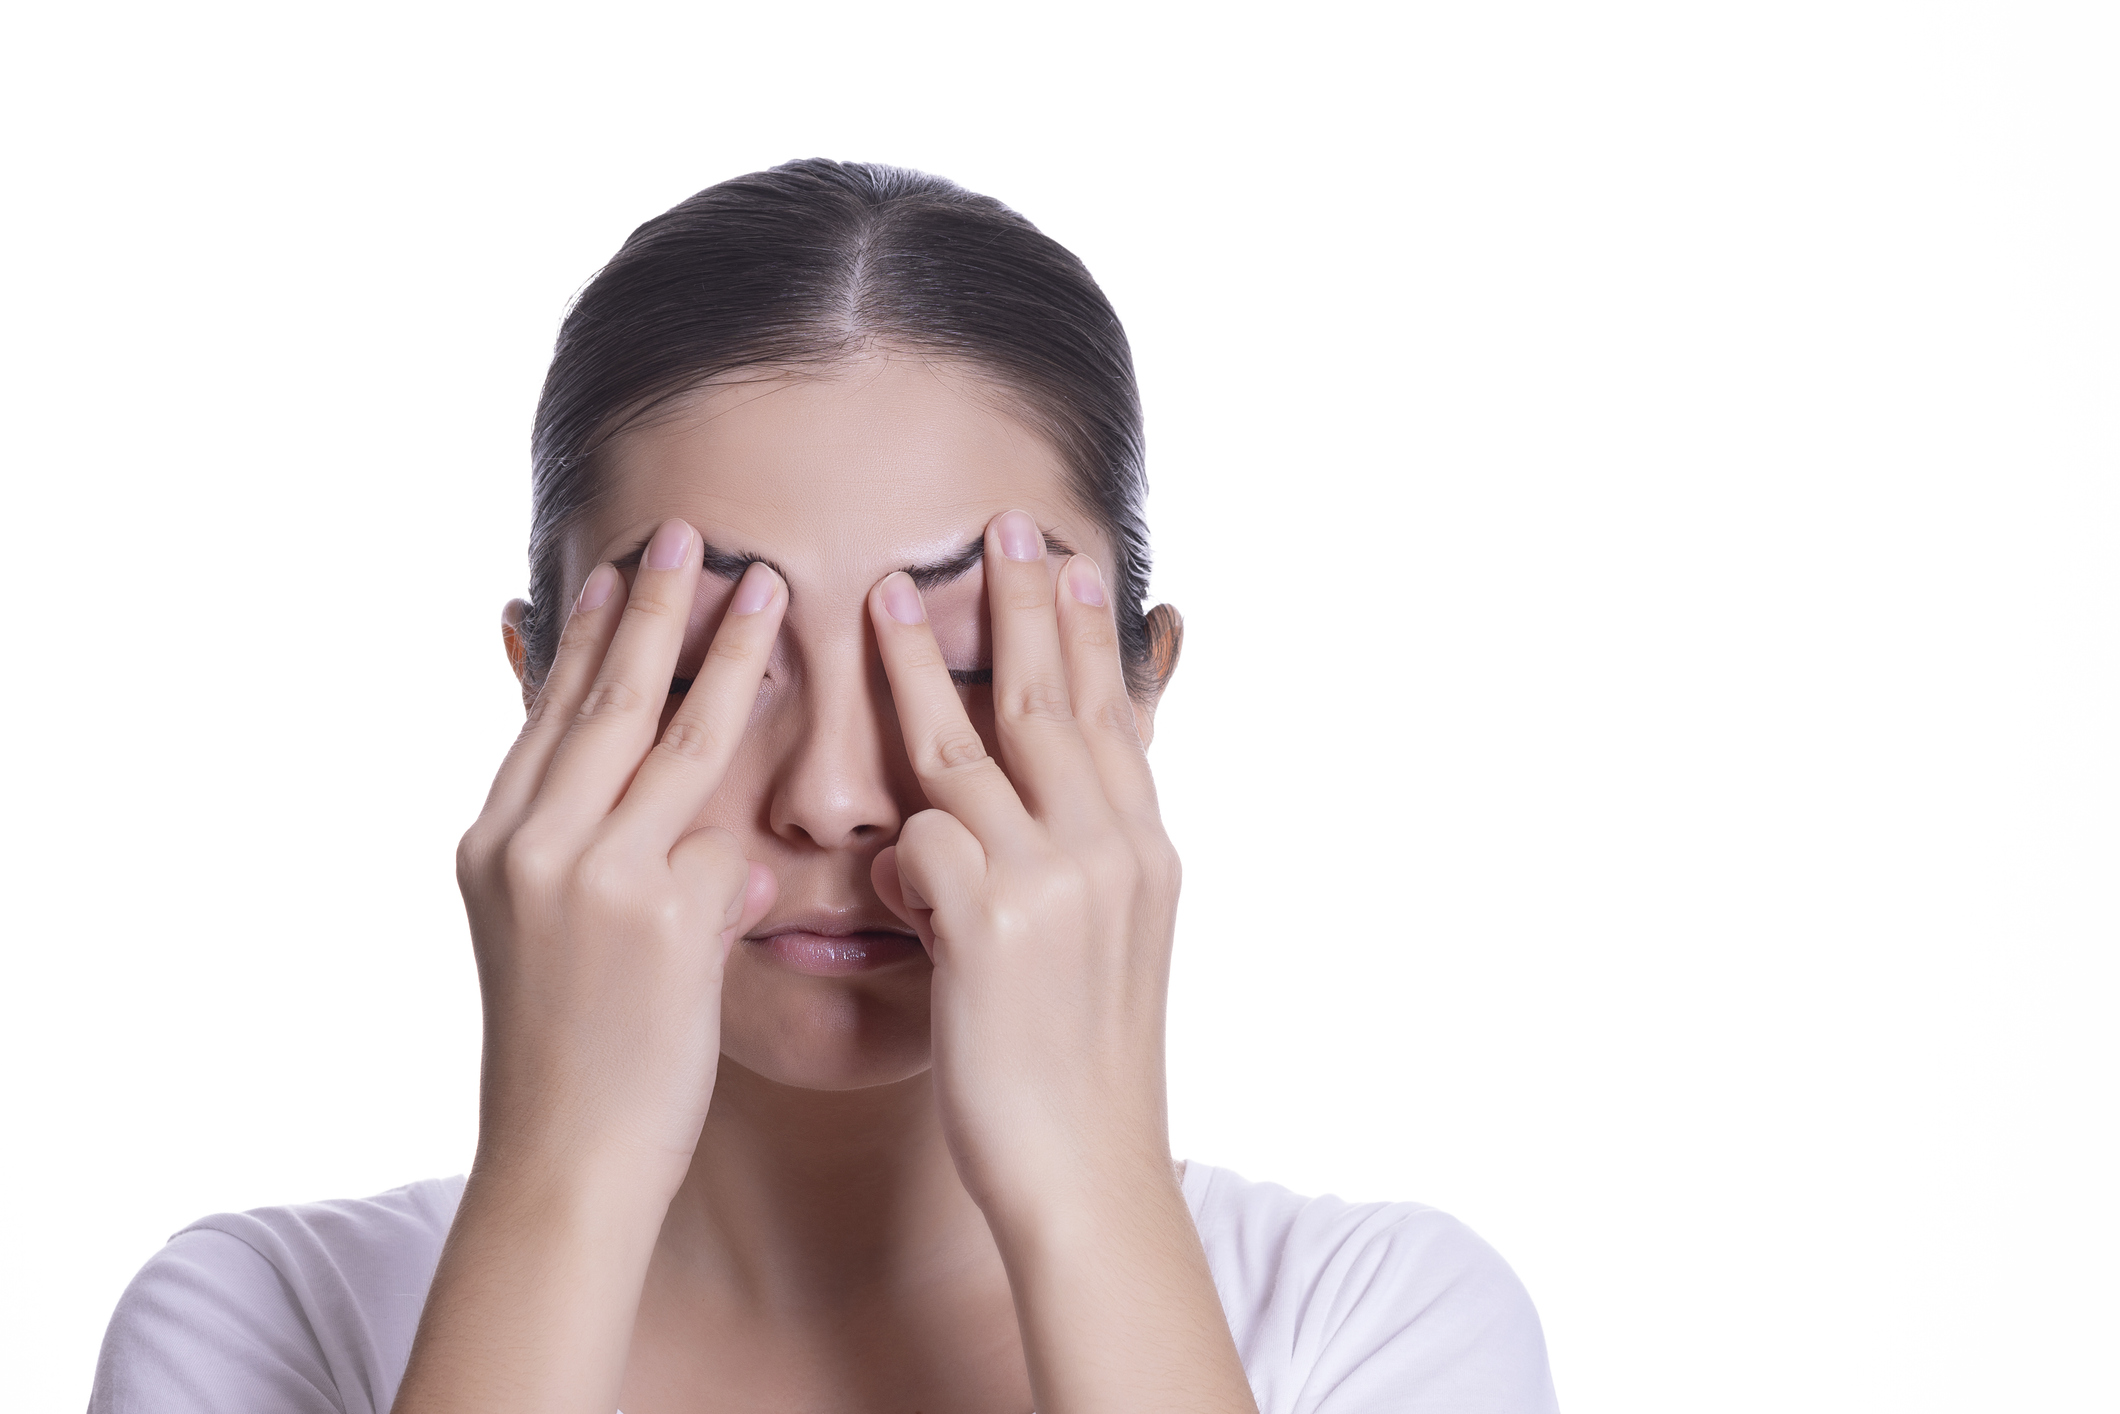 Eye Yoga: Simple Exercises For Eye Strain Relief